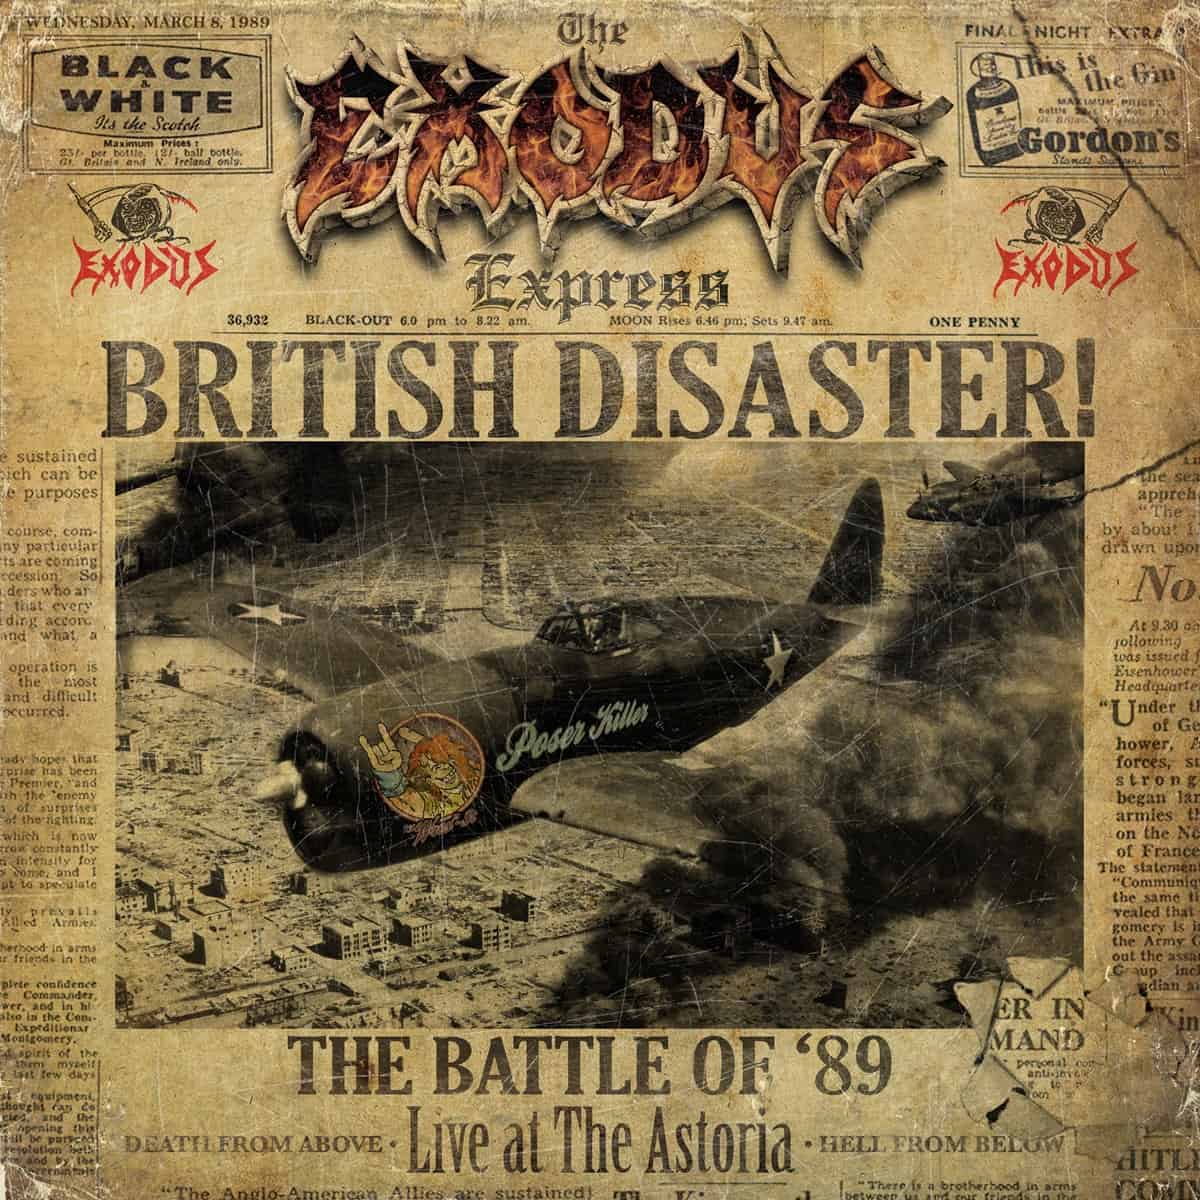 Exodus Fabulous Disaster (Live At The Astoria)